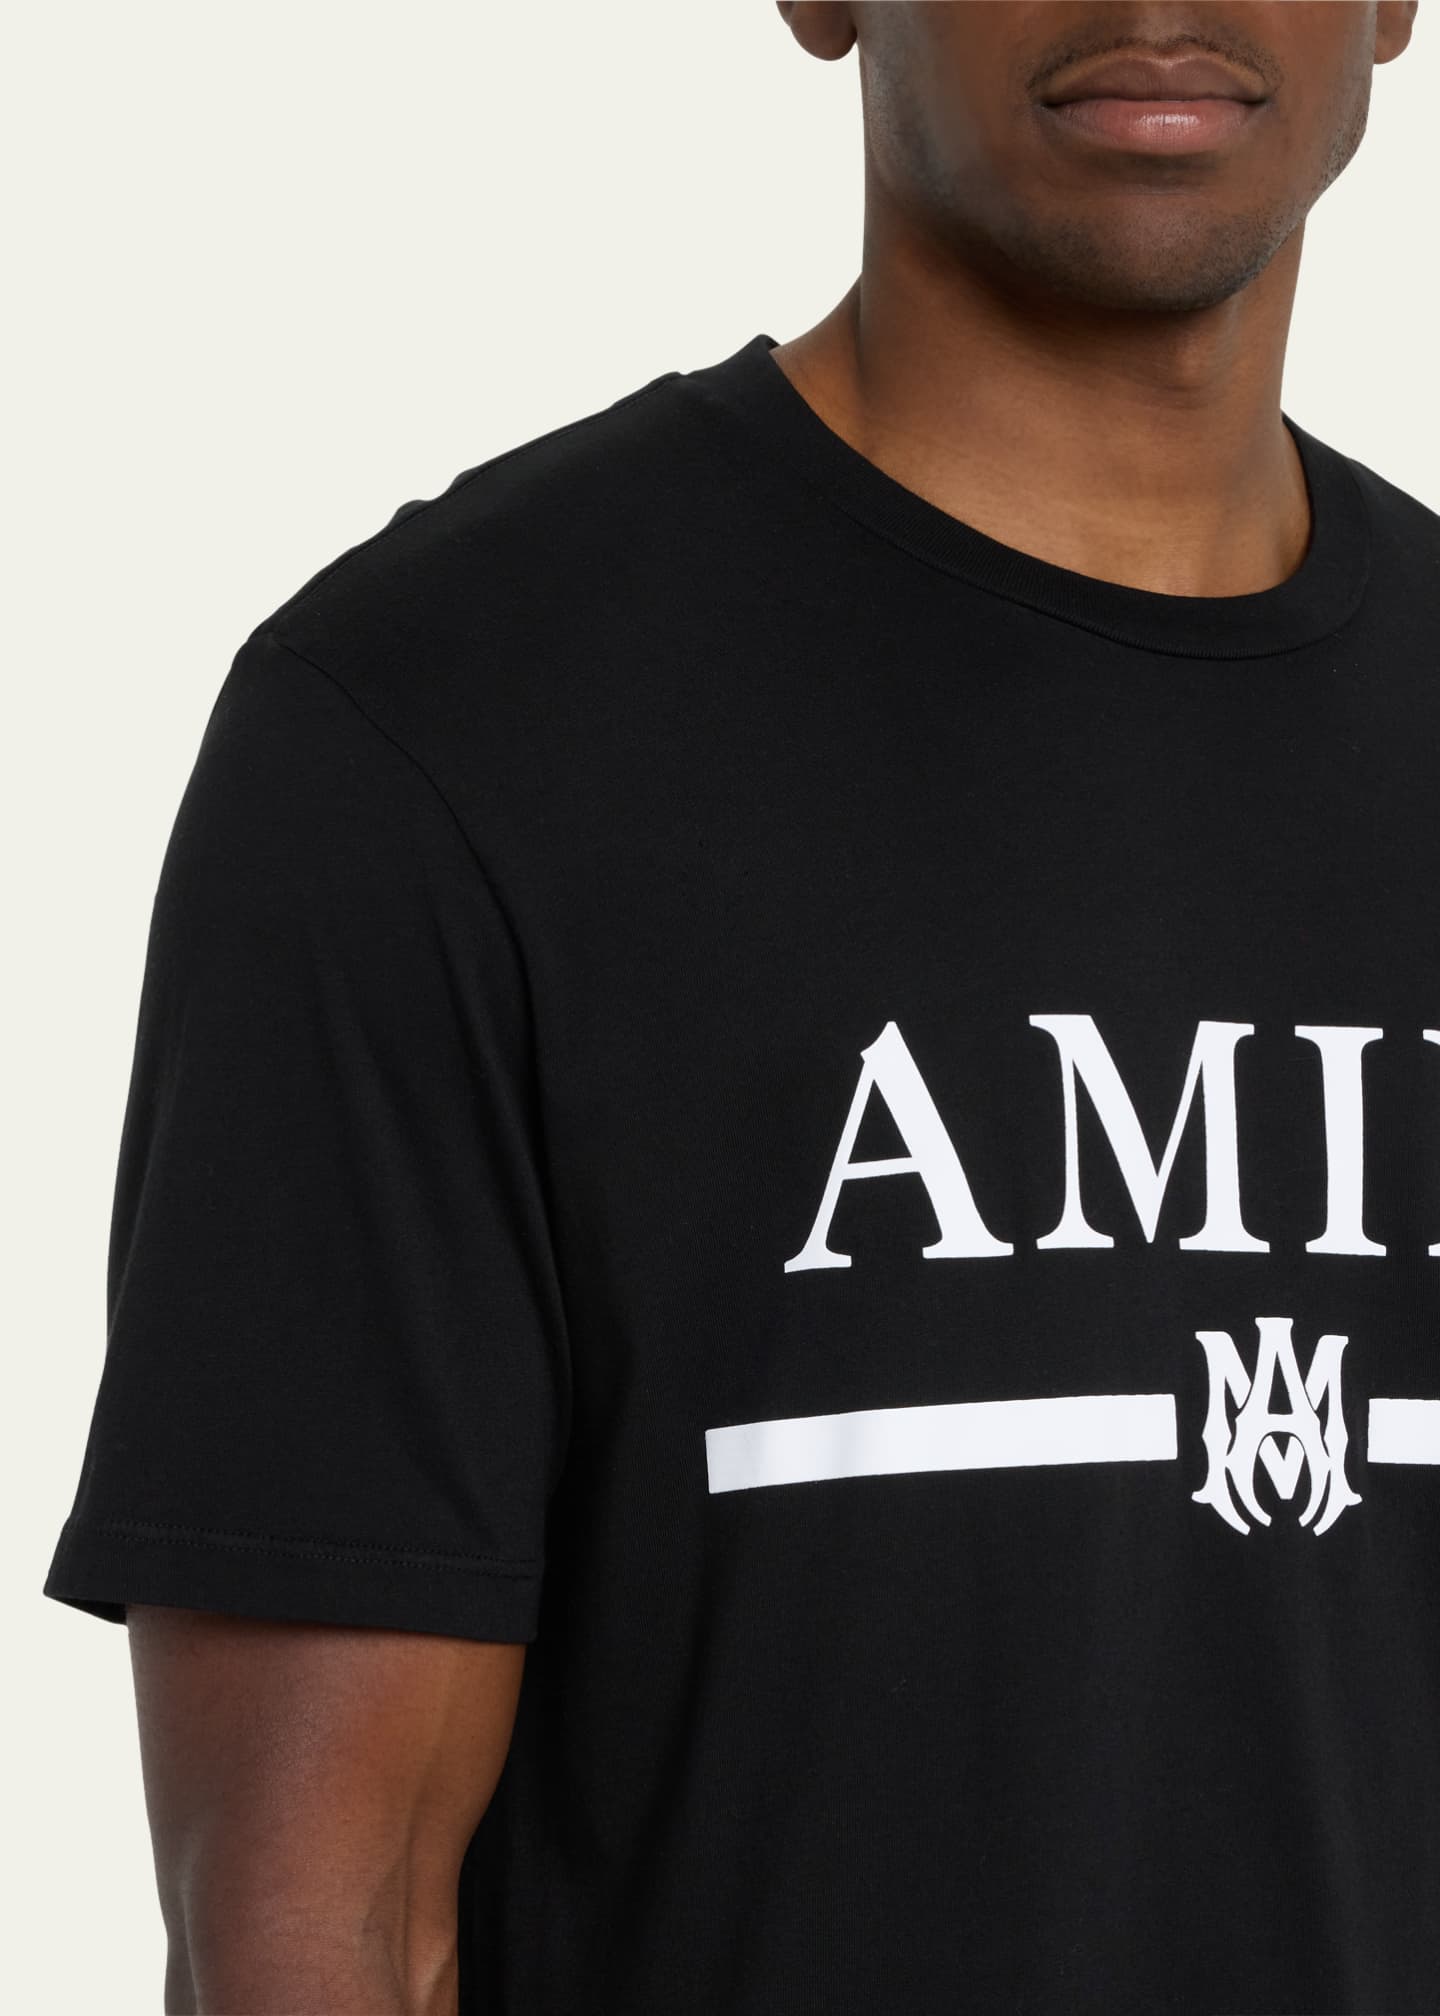 Amiri T-shirt,gift T-shirt